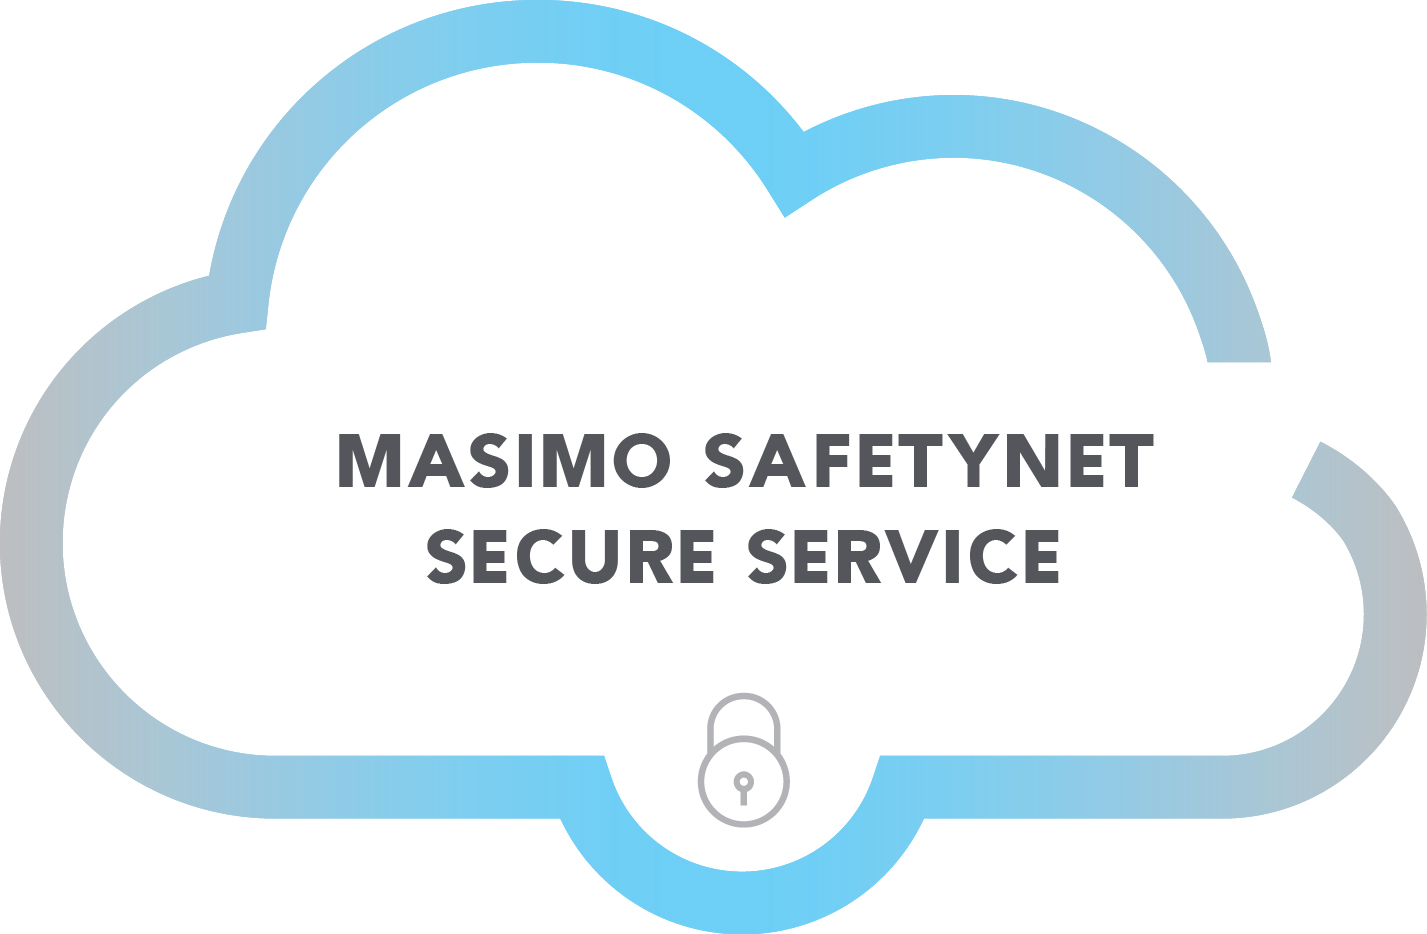 Masimo SafetyNet Secure Service logo.